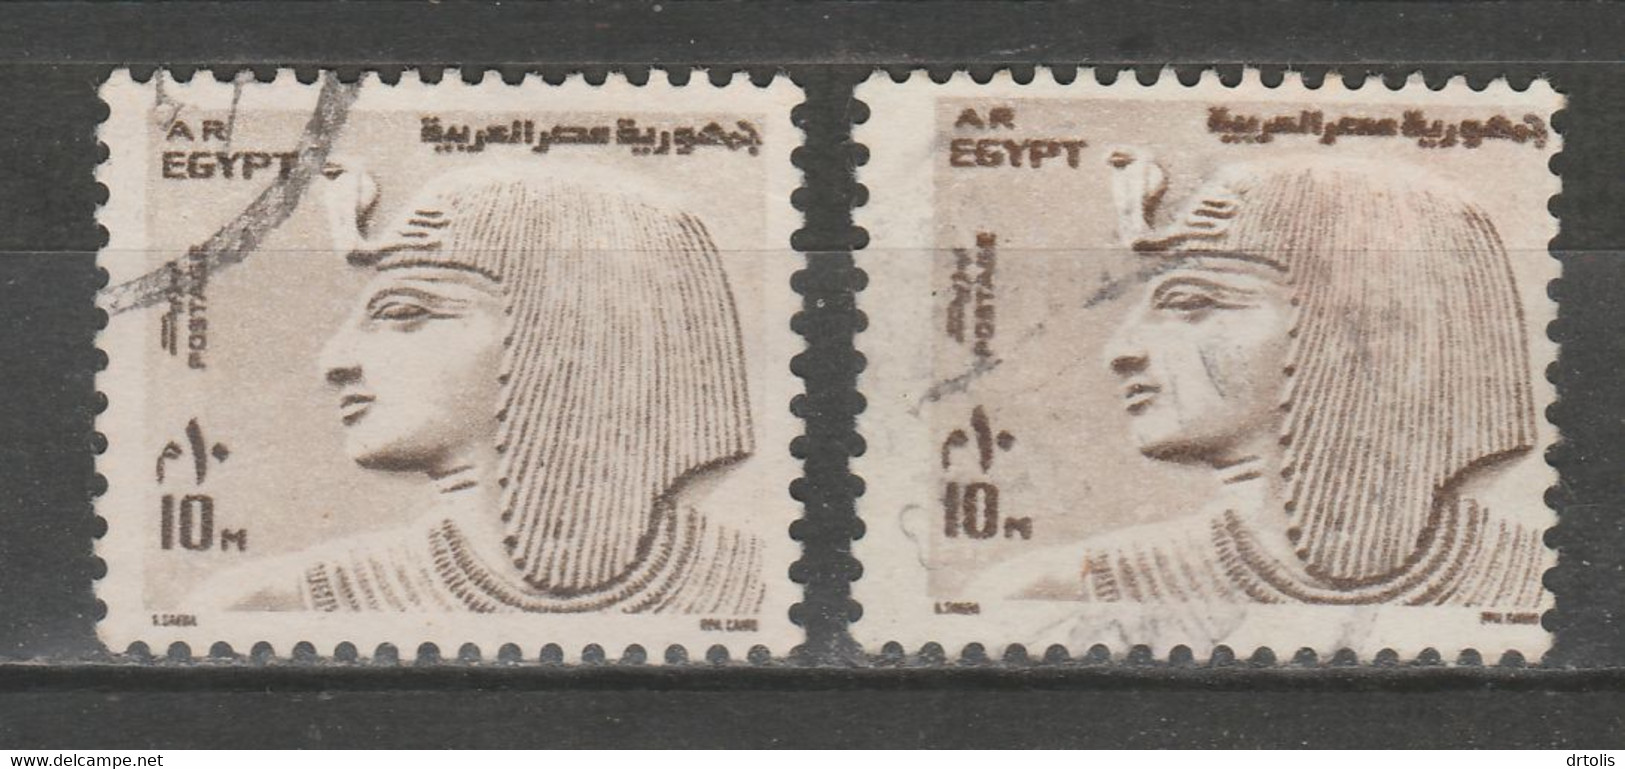 EGYPT / PERFORATION ERROR ERROR / VF USED - Gebraucht